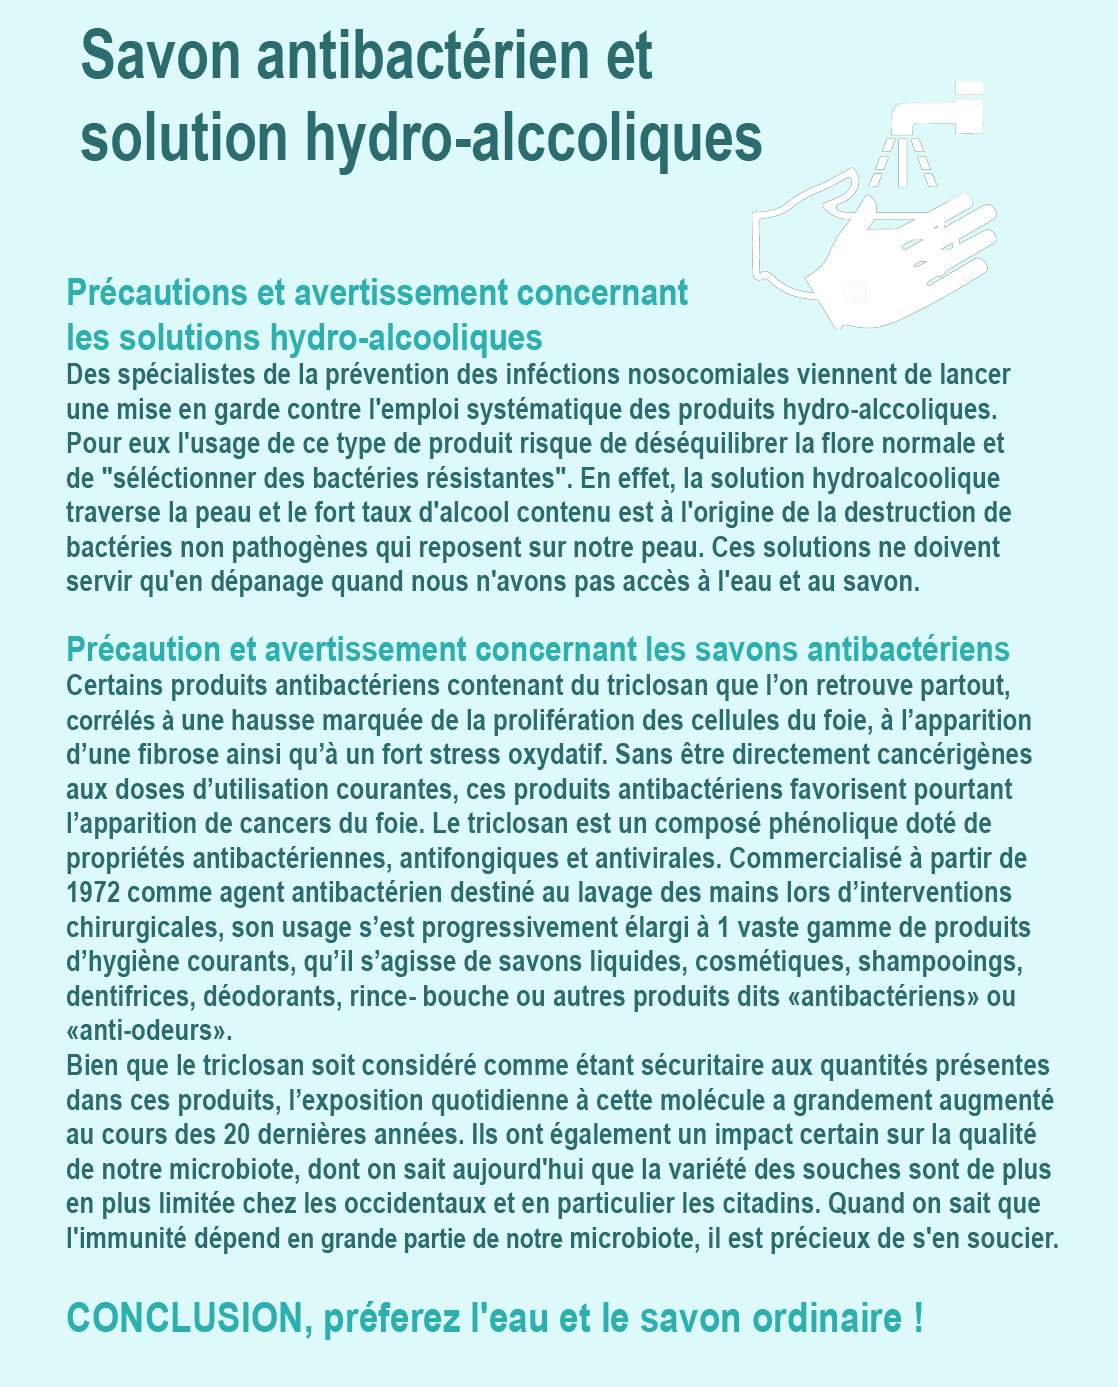 0-Antibacterien et hydro-alccoliques copie.jpg